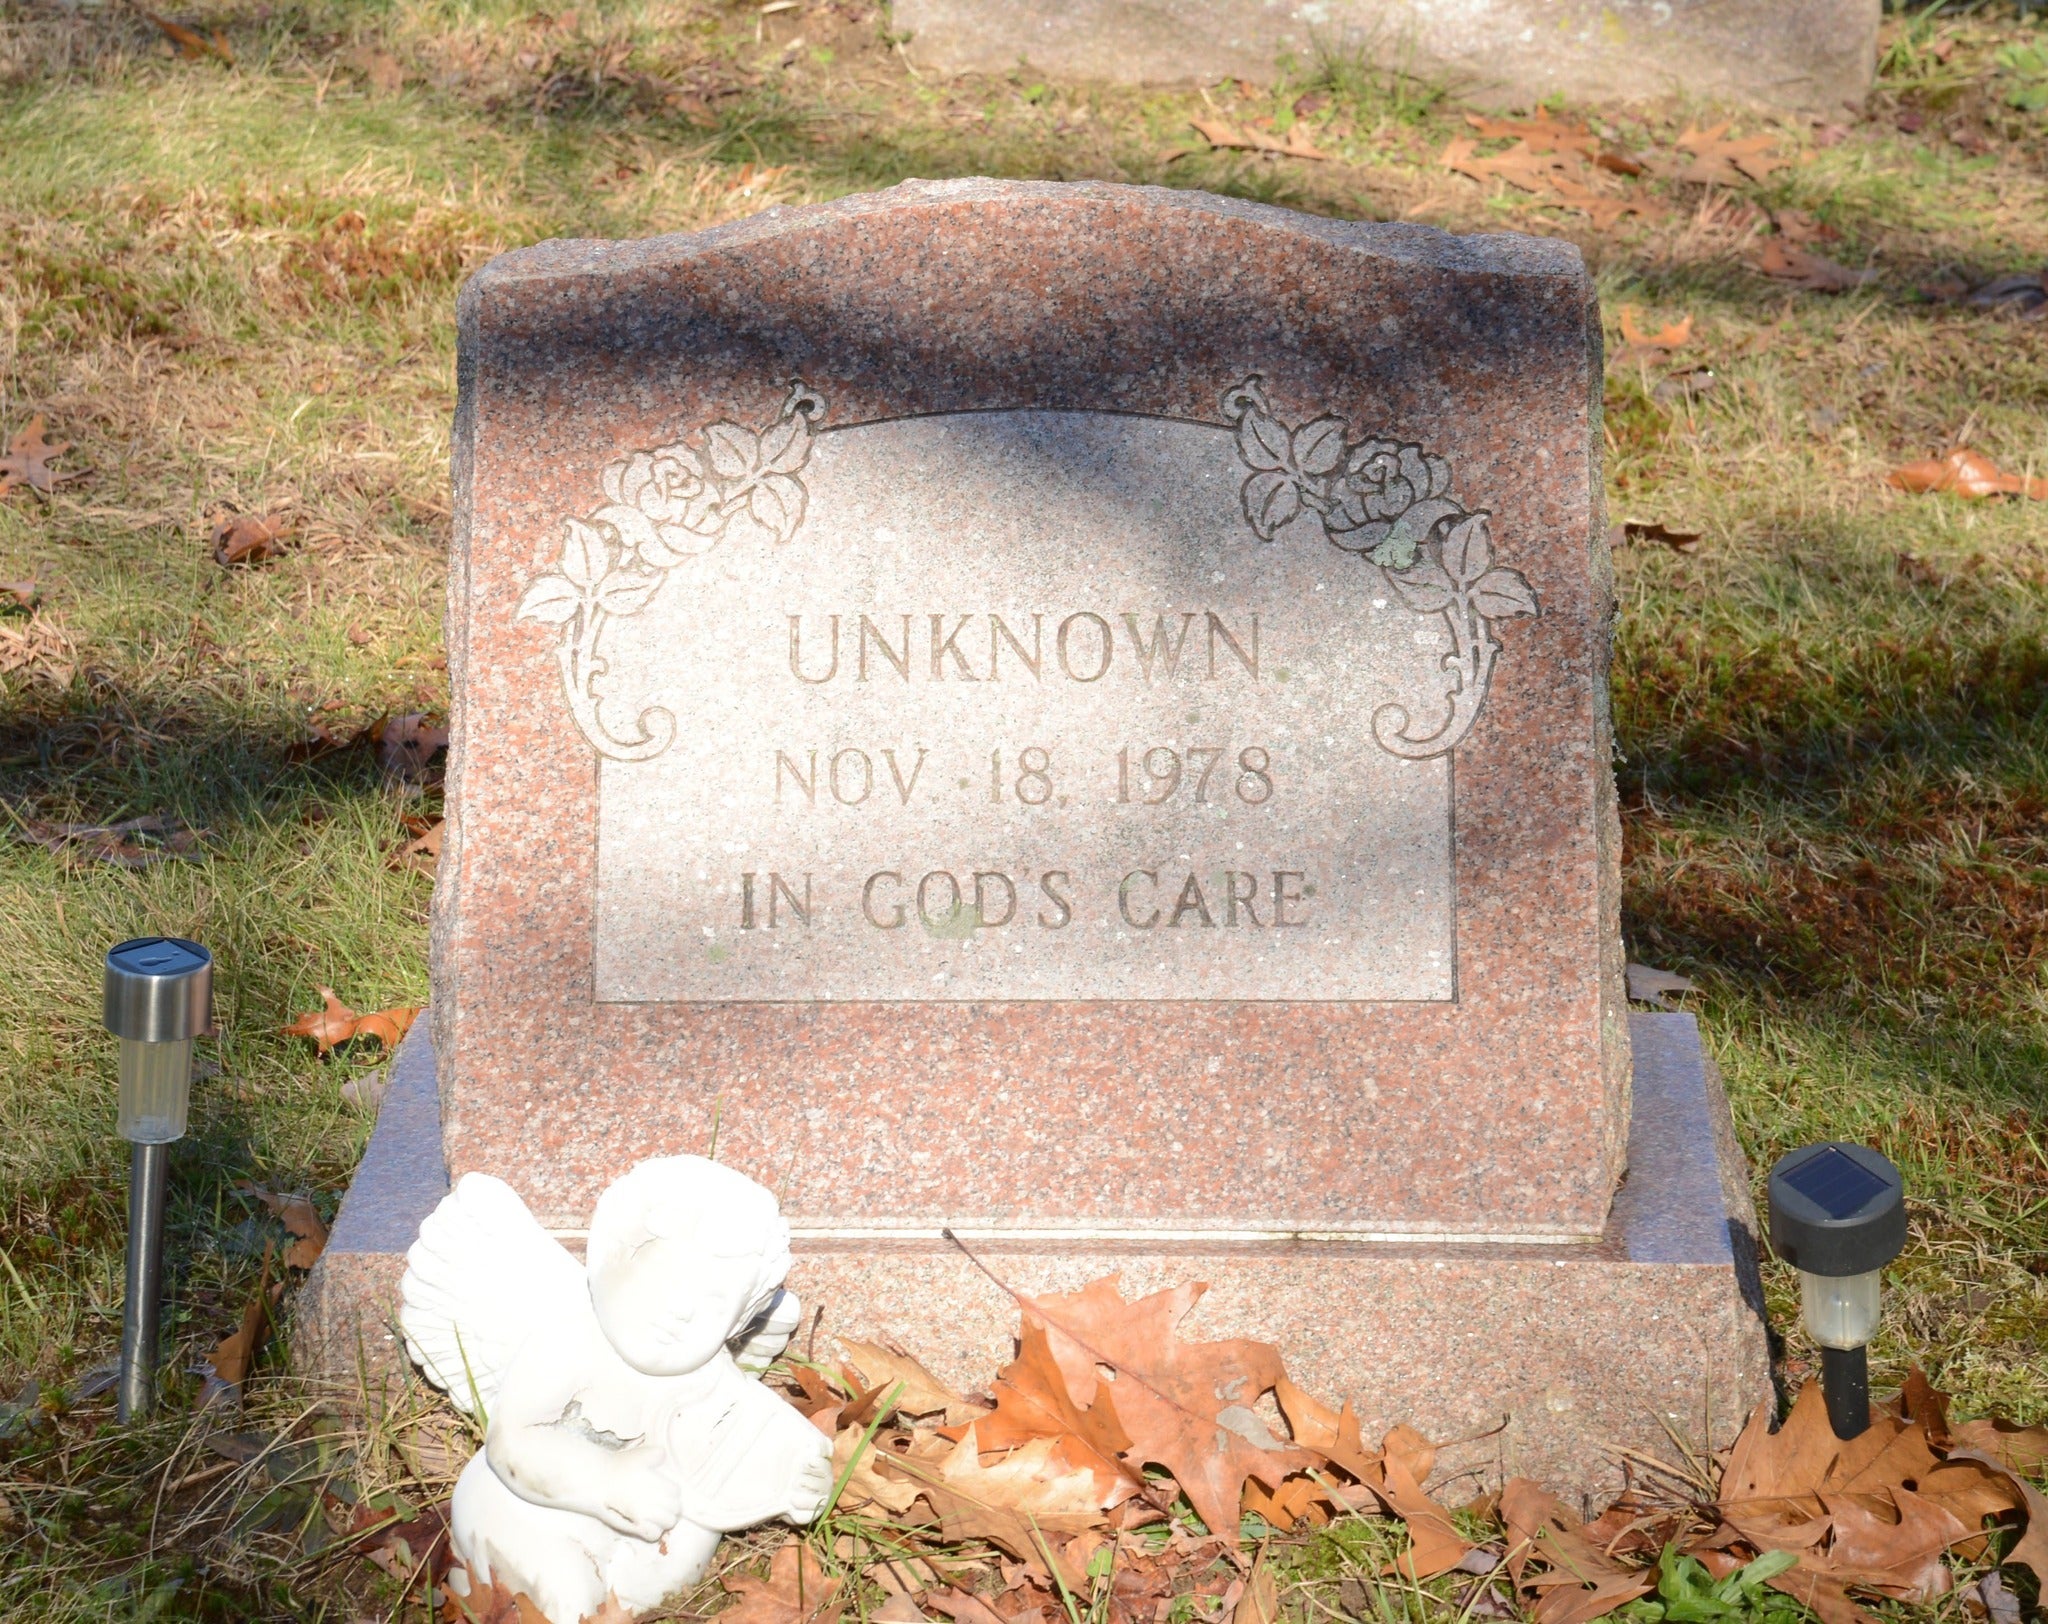 Patricia Ann Tucker's grave in Granby, Mass. The marker reads "Unknown. Nov. 18, 1978. In God's care." 